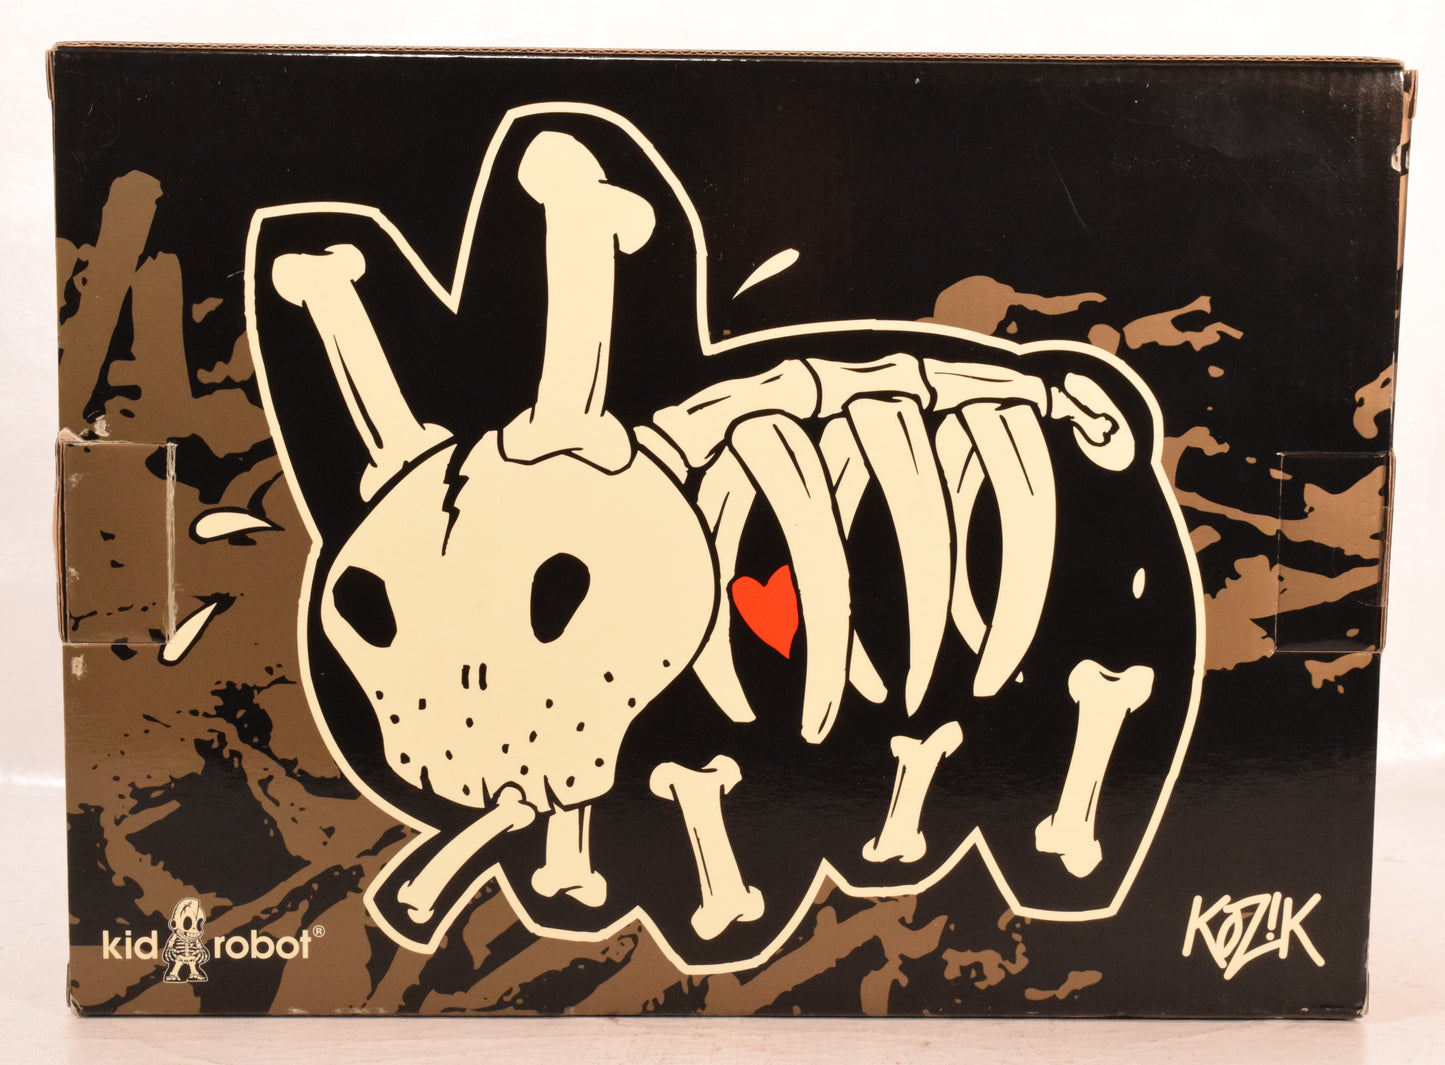 Frank Kozik Kidrobot Labbit Bones Glow GID 10" Vinyl Figure Signed